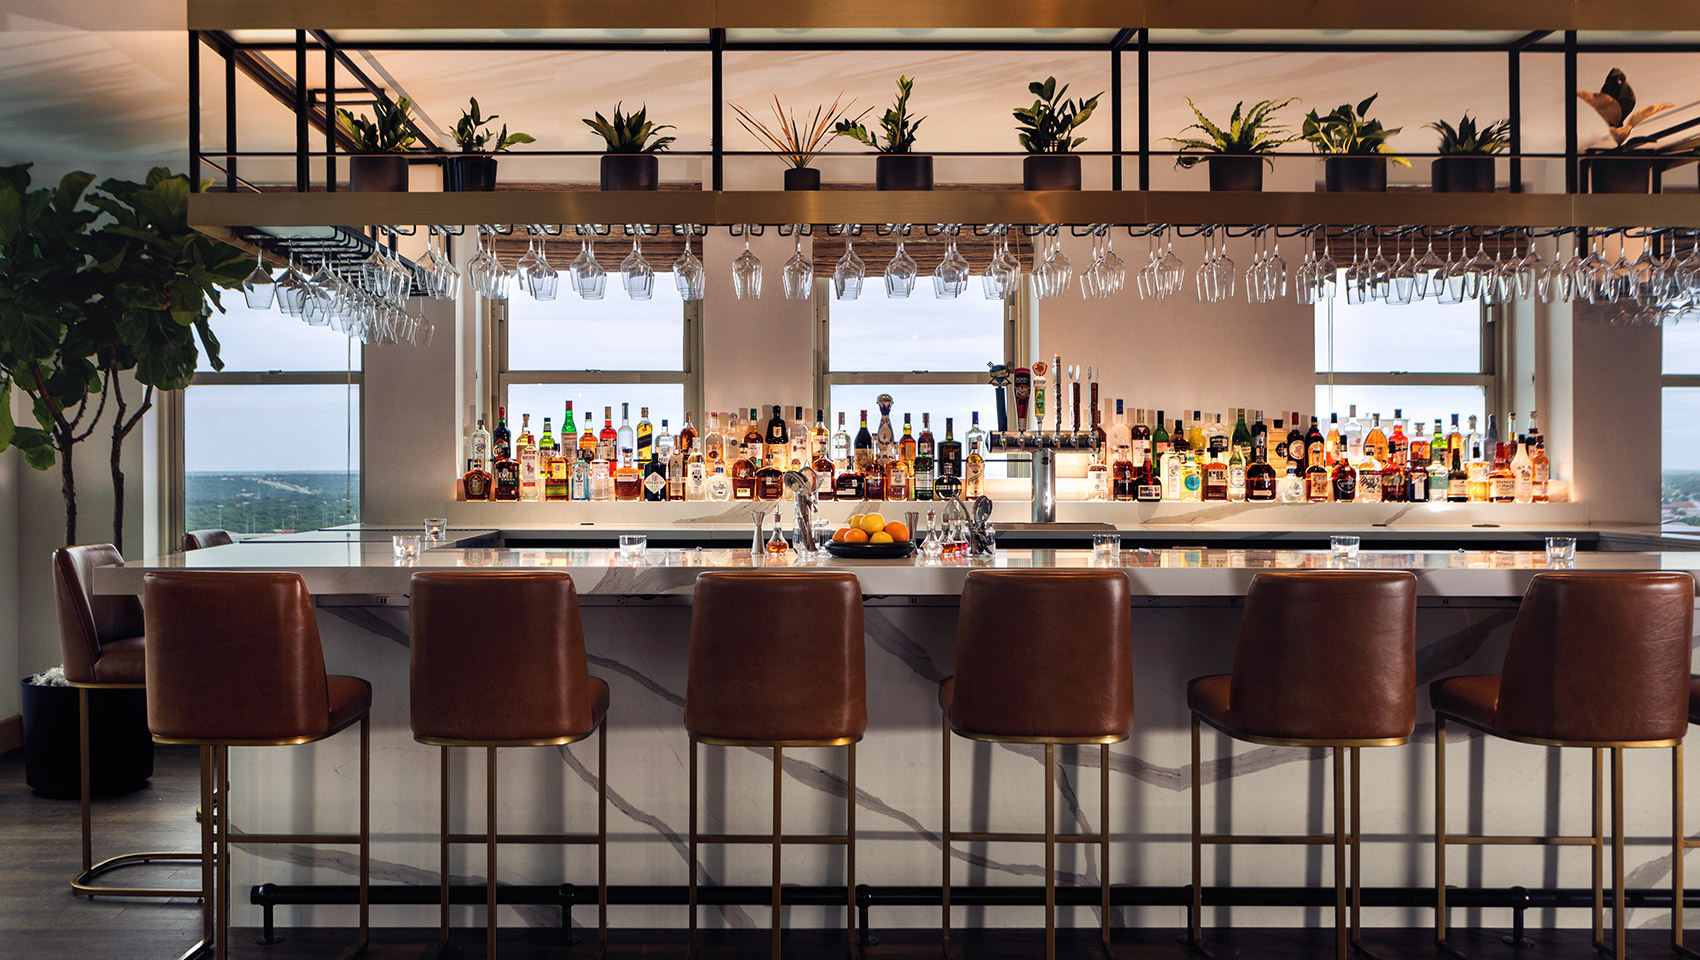 Kimpton Harper Penthouse bar and cocktail lounge